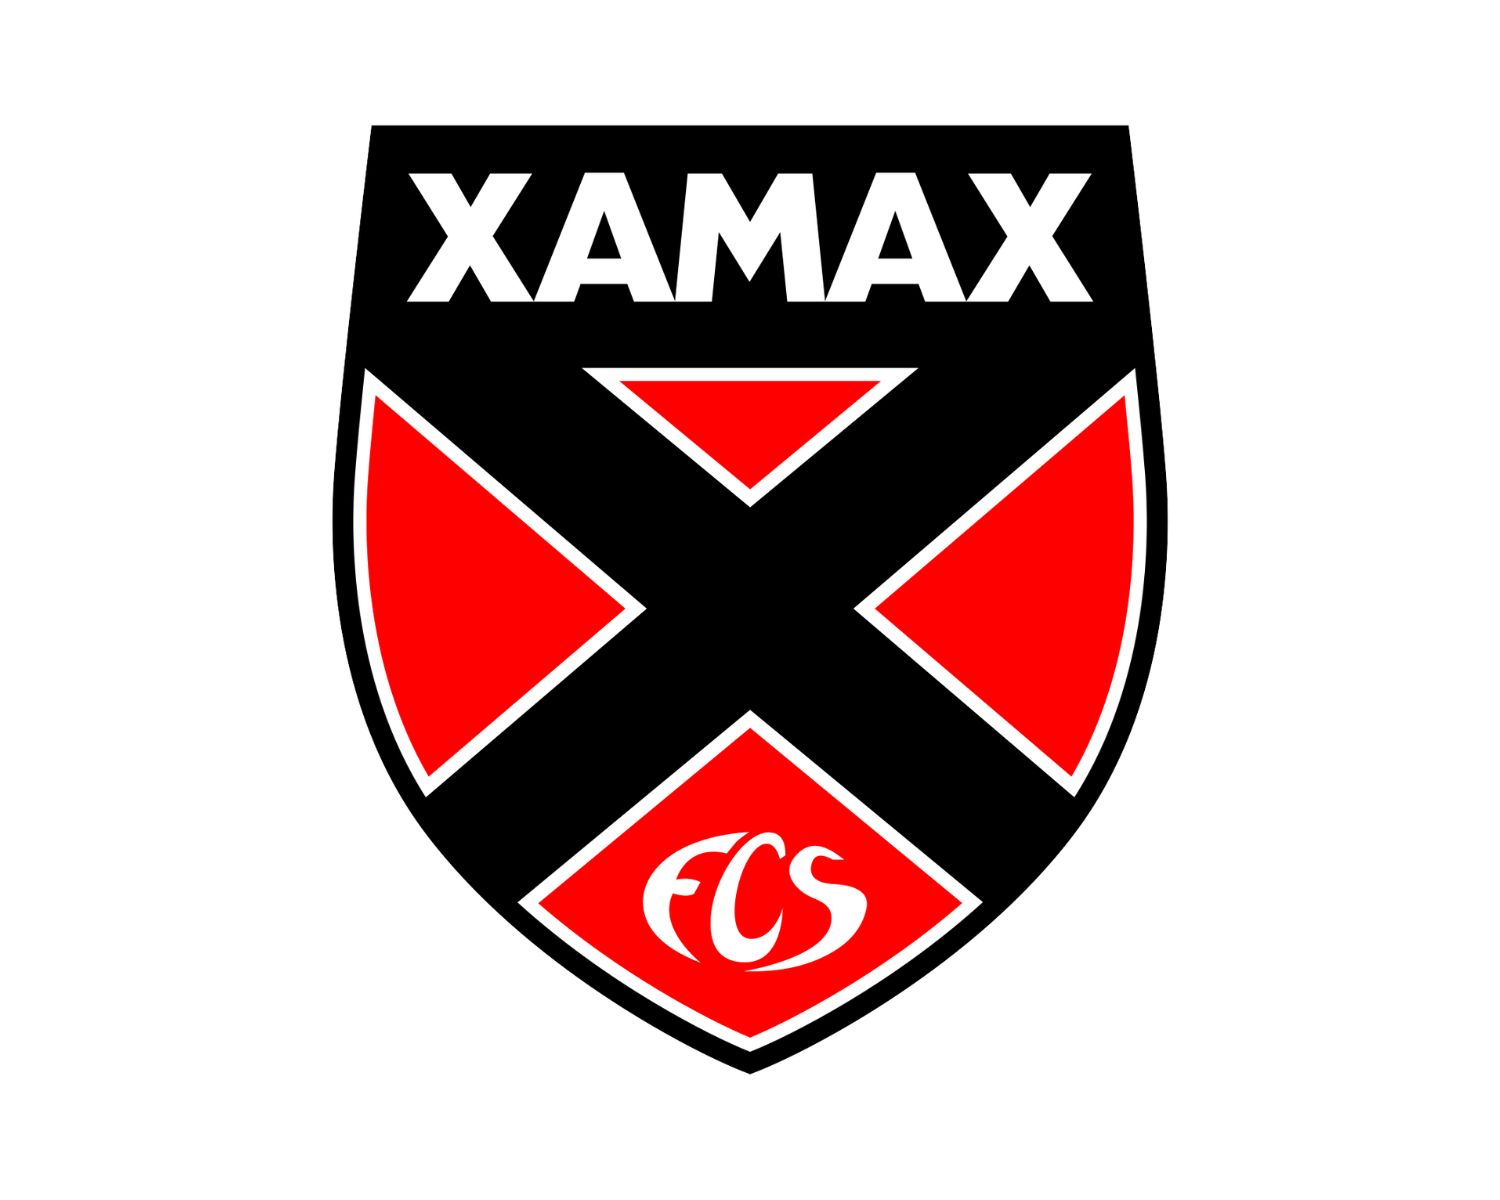 neuchatel-xamax-fcs-22-football-club-facts